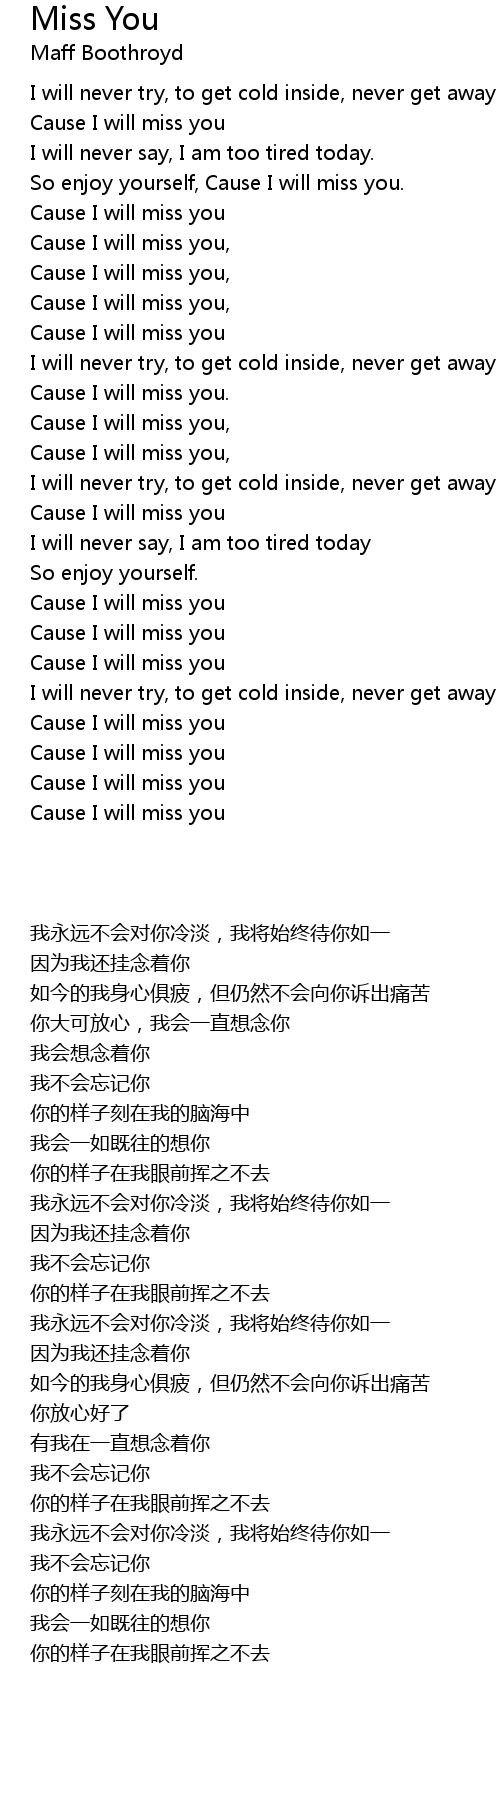 Miss You Lyrics